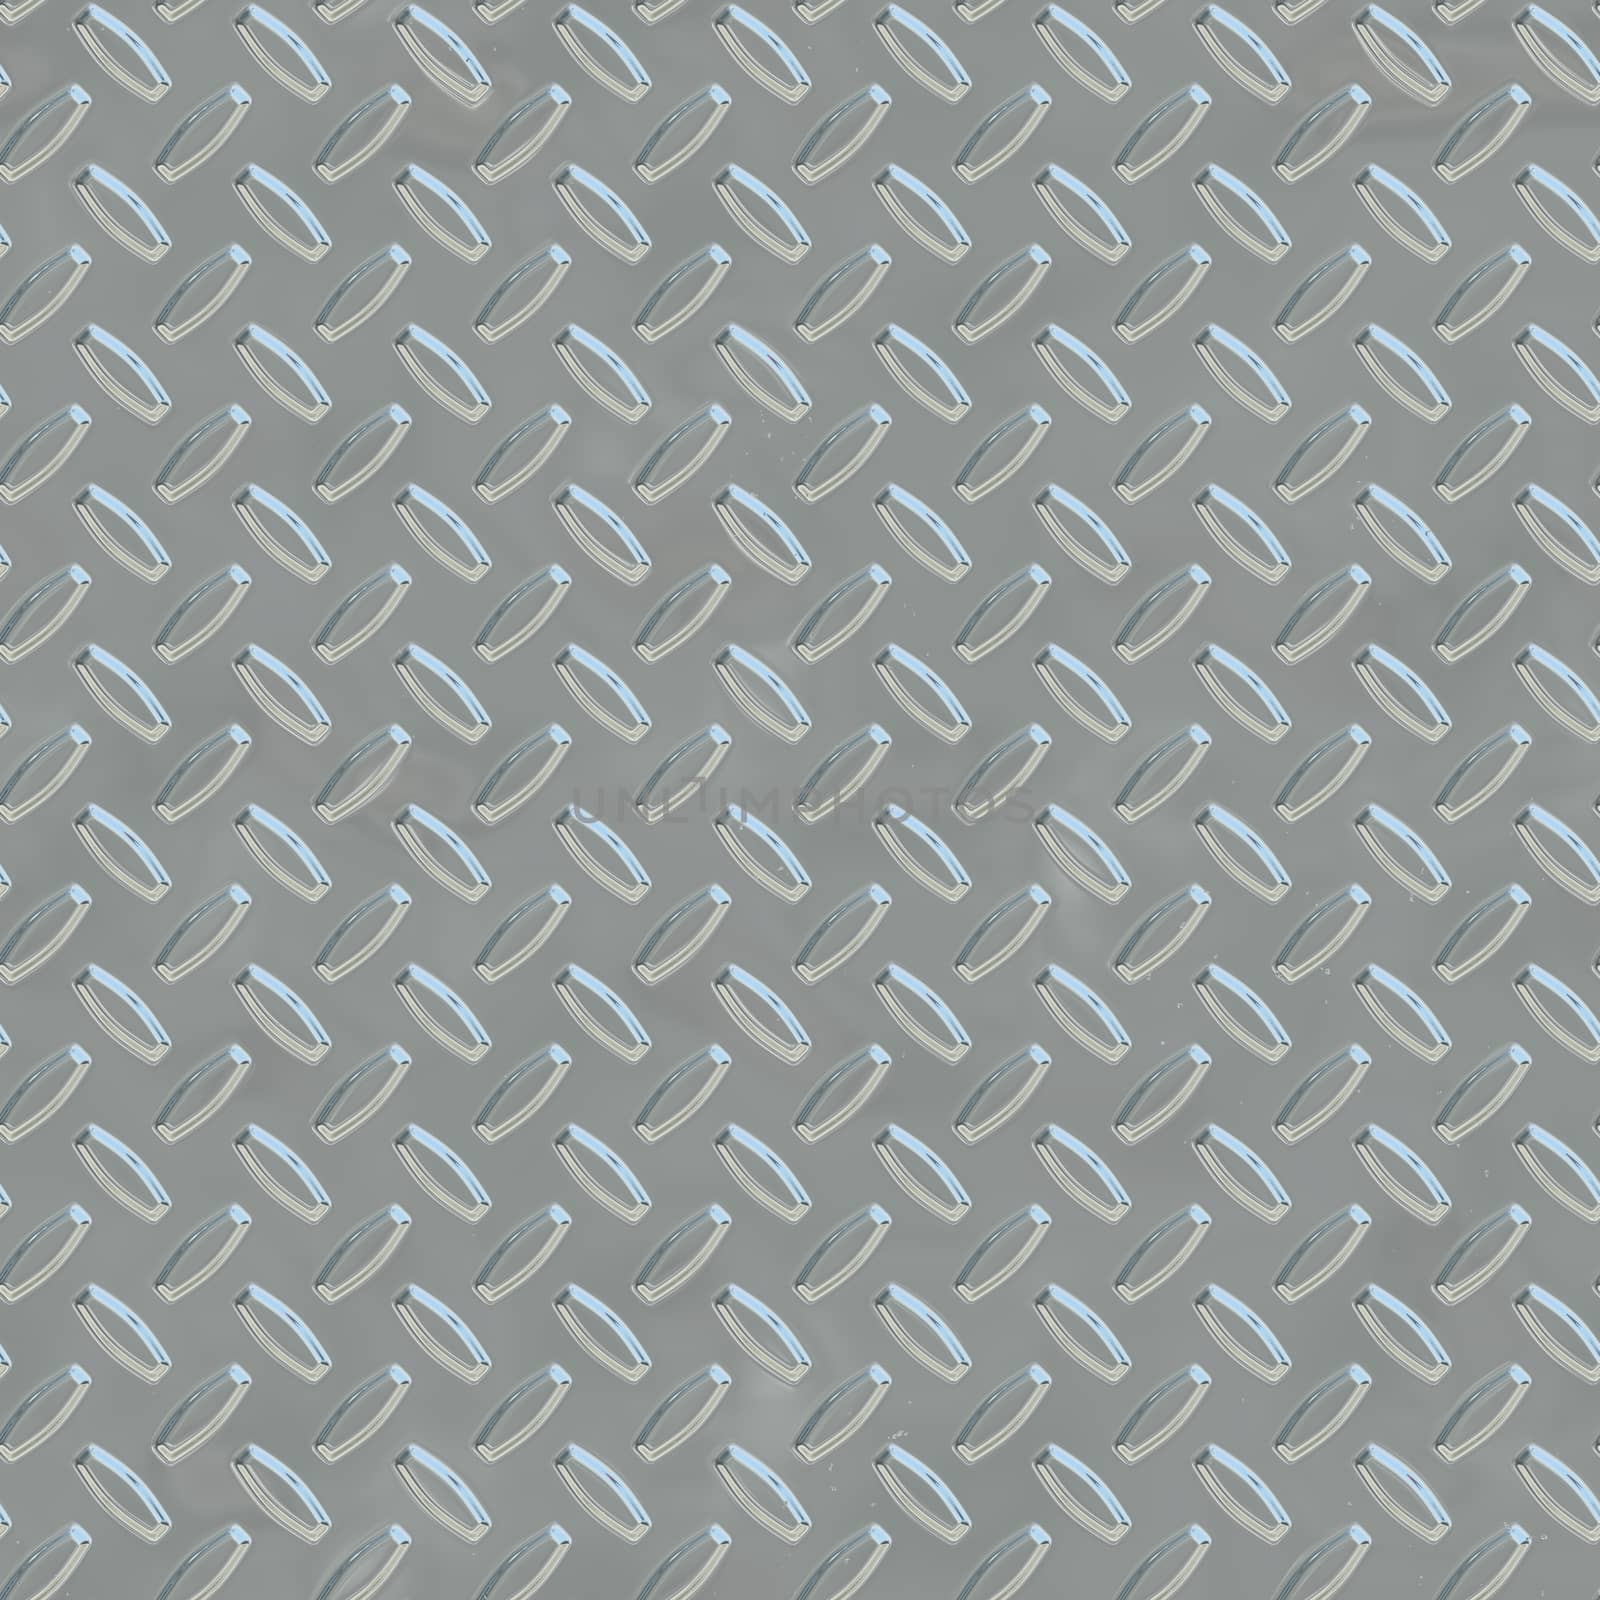 Steel gray diamond shiny metal plate seamless pattern, or texture.